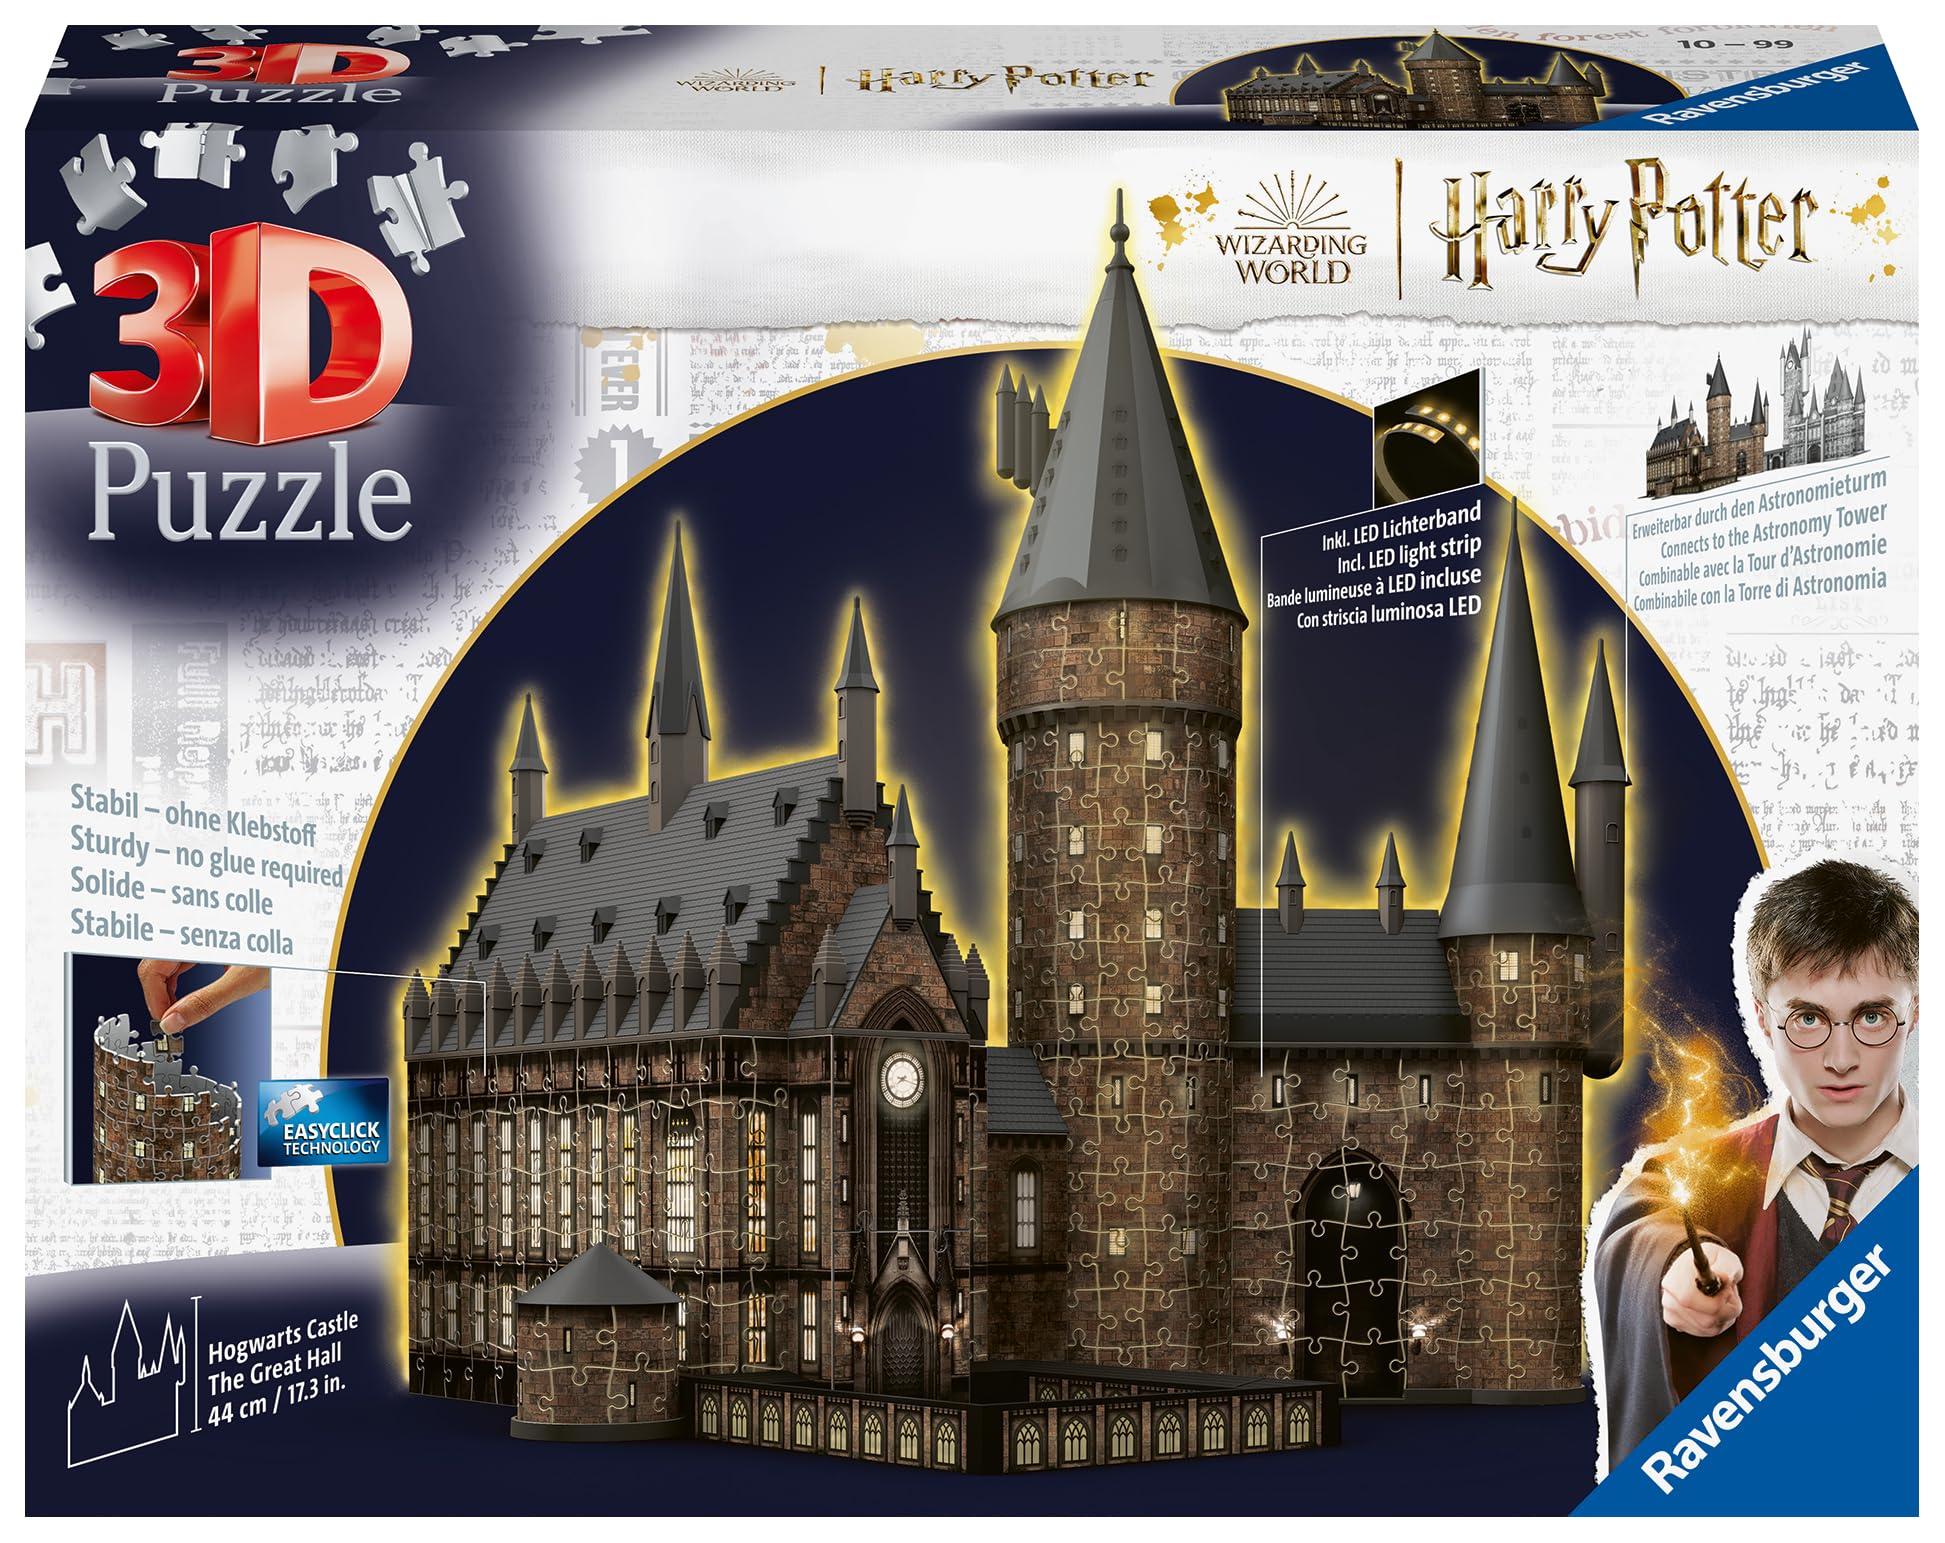 Ravensburger 3D Puzzle 11550 - Harry Potter Hogwarts Schloss - Die Große Halle - Night Edition - 540 Teile - Beleuchtetes Hogwarts Castle für Harry Potter Fans ab 10 Jahren, Harry Potter Geschenke